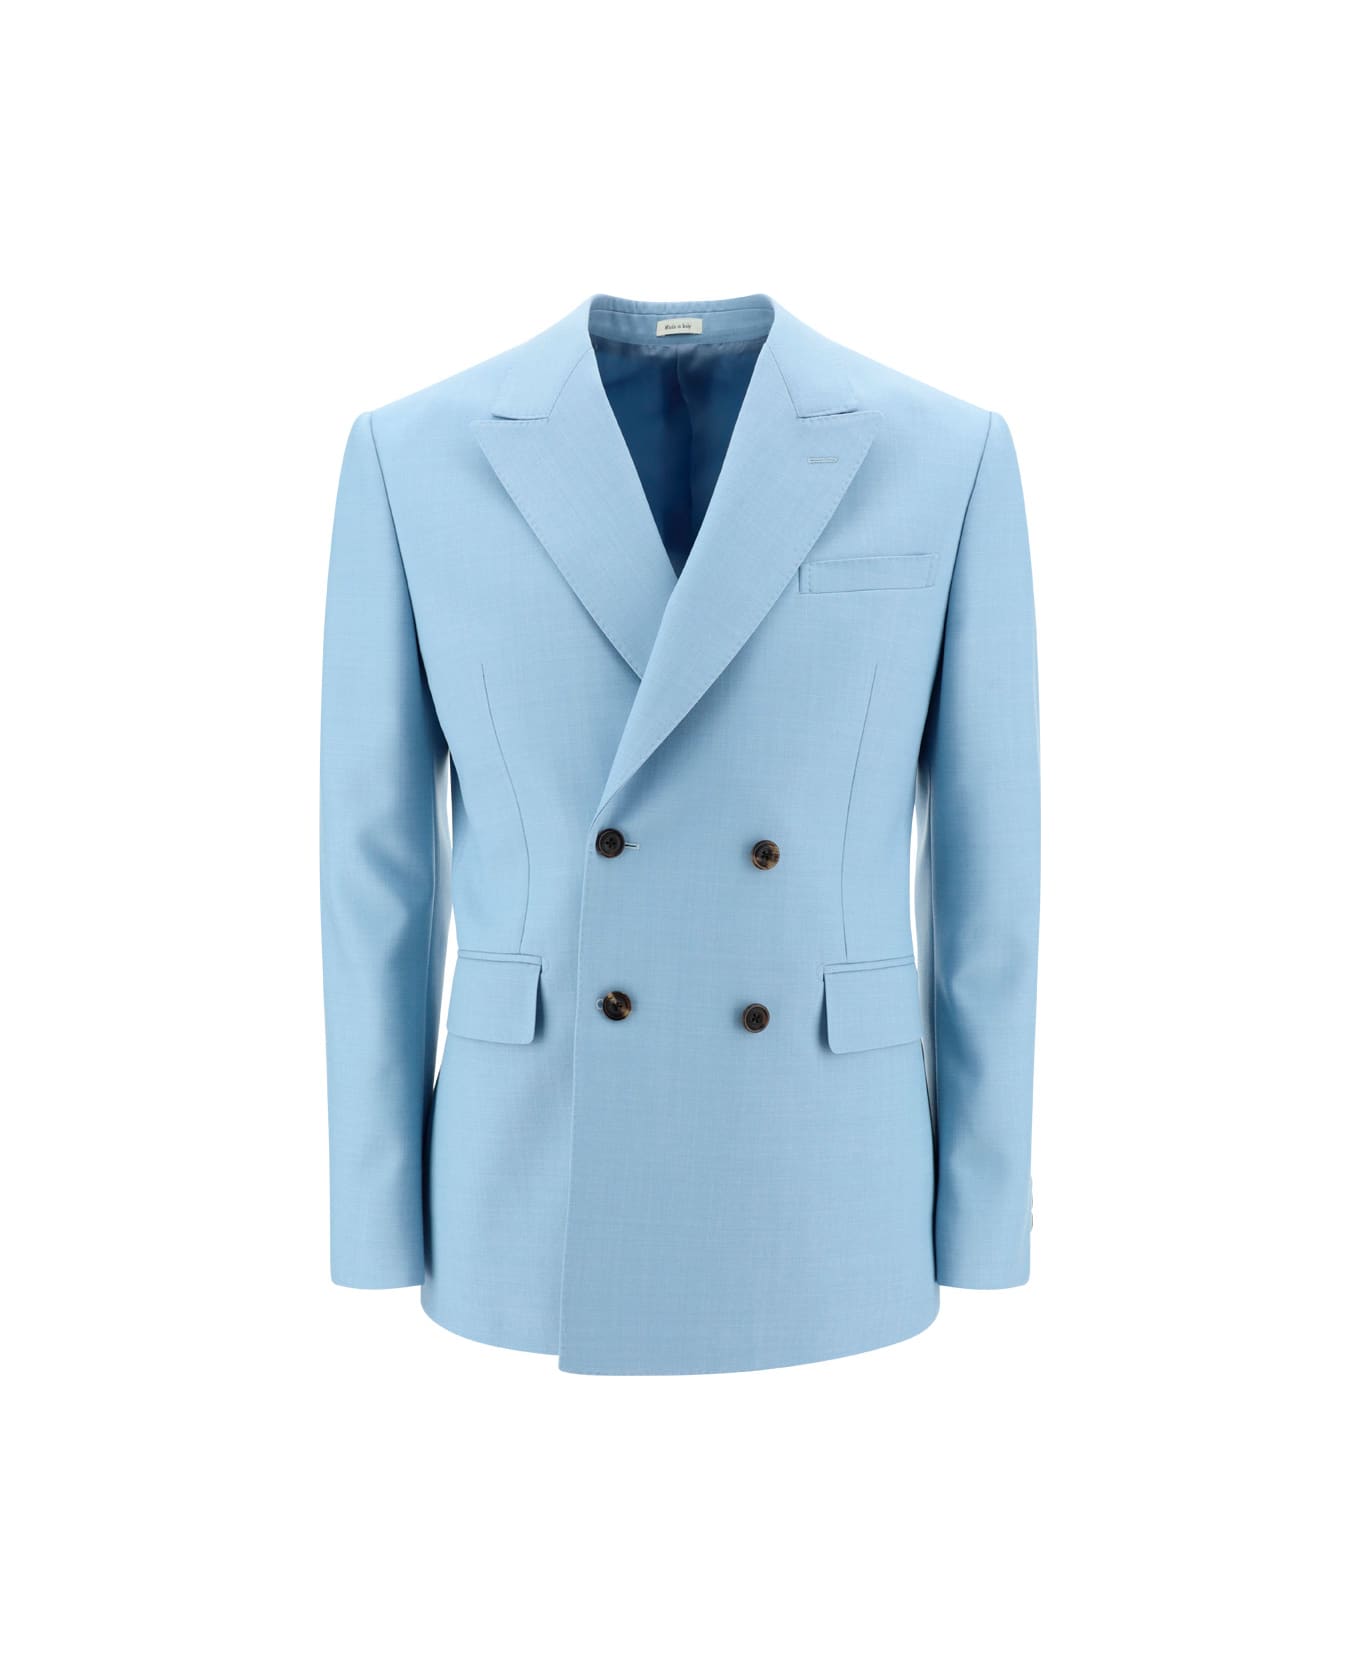 Alexander McQueen Neat Blazer Jacket - Pale Blue